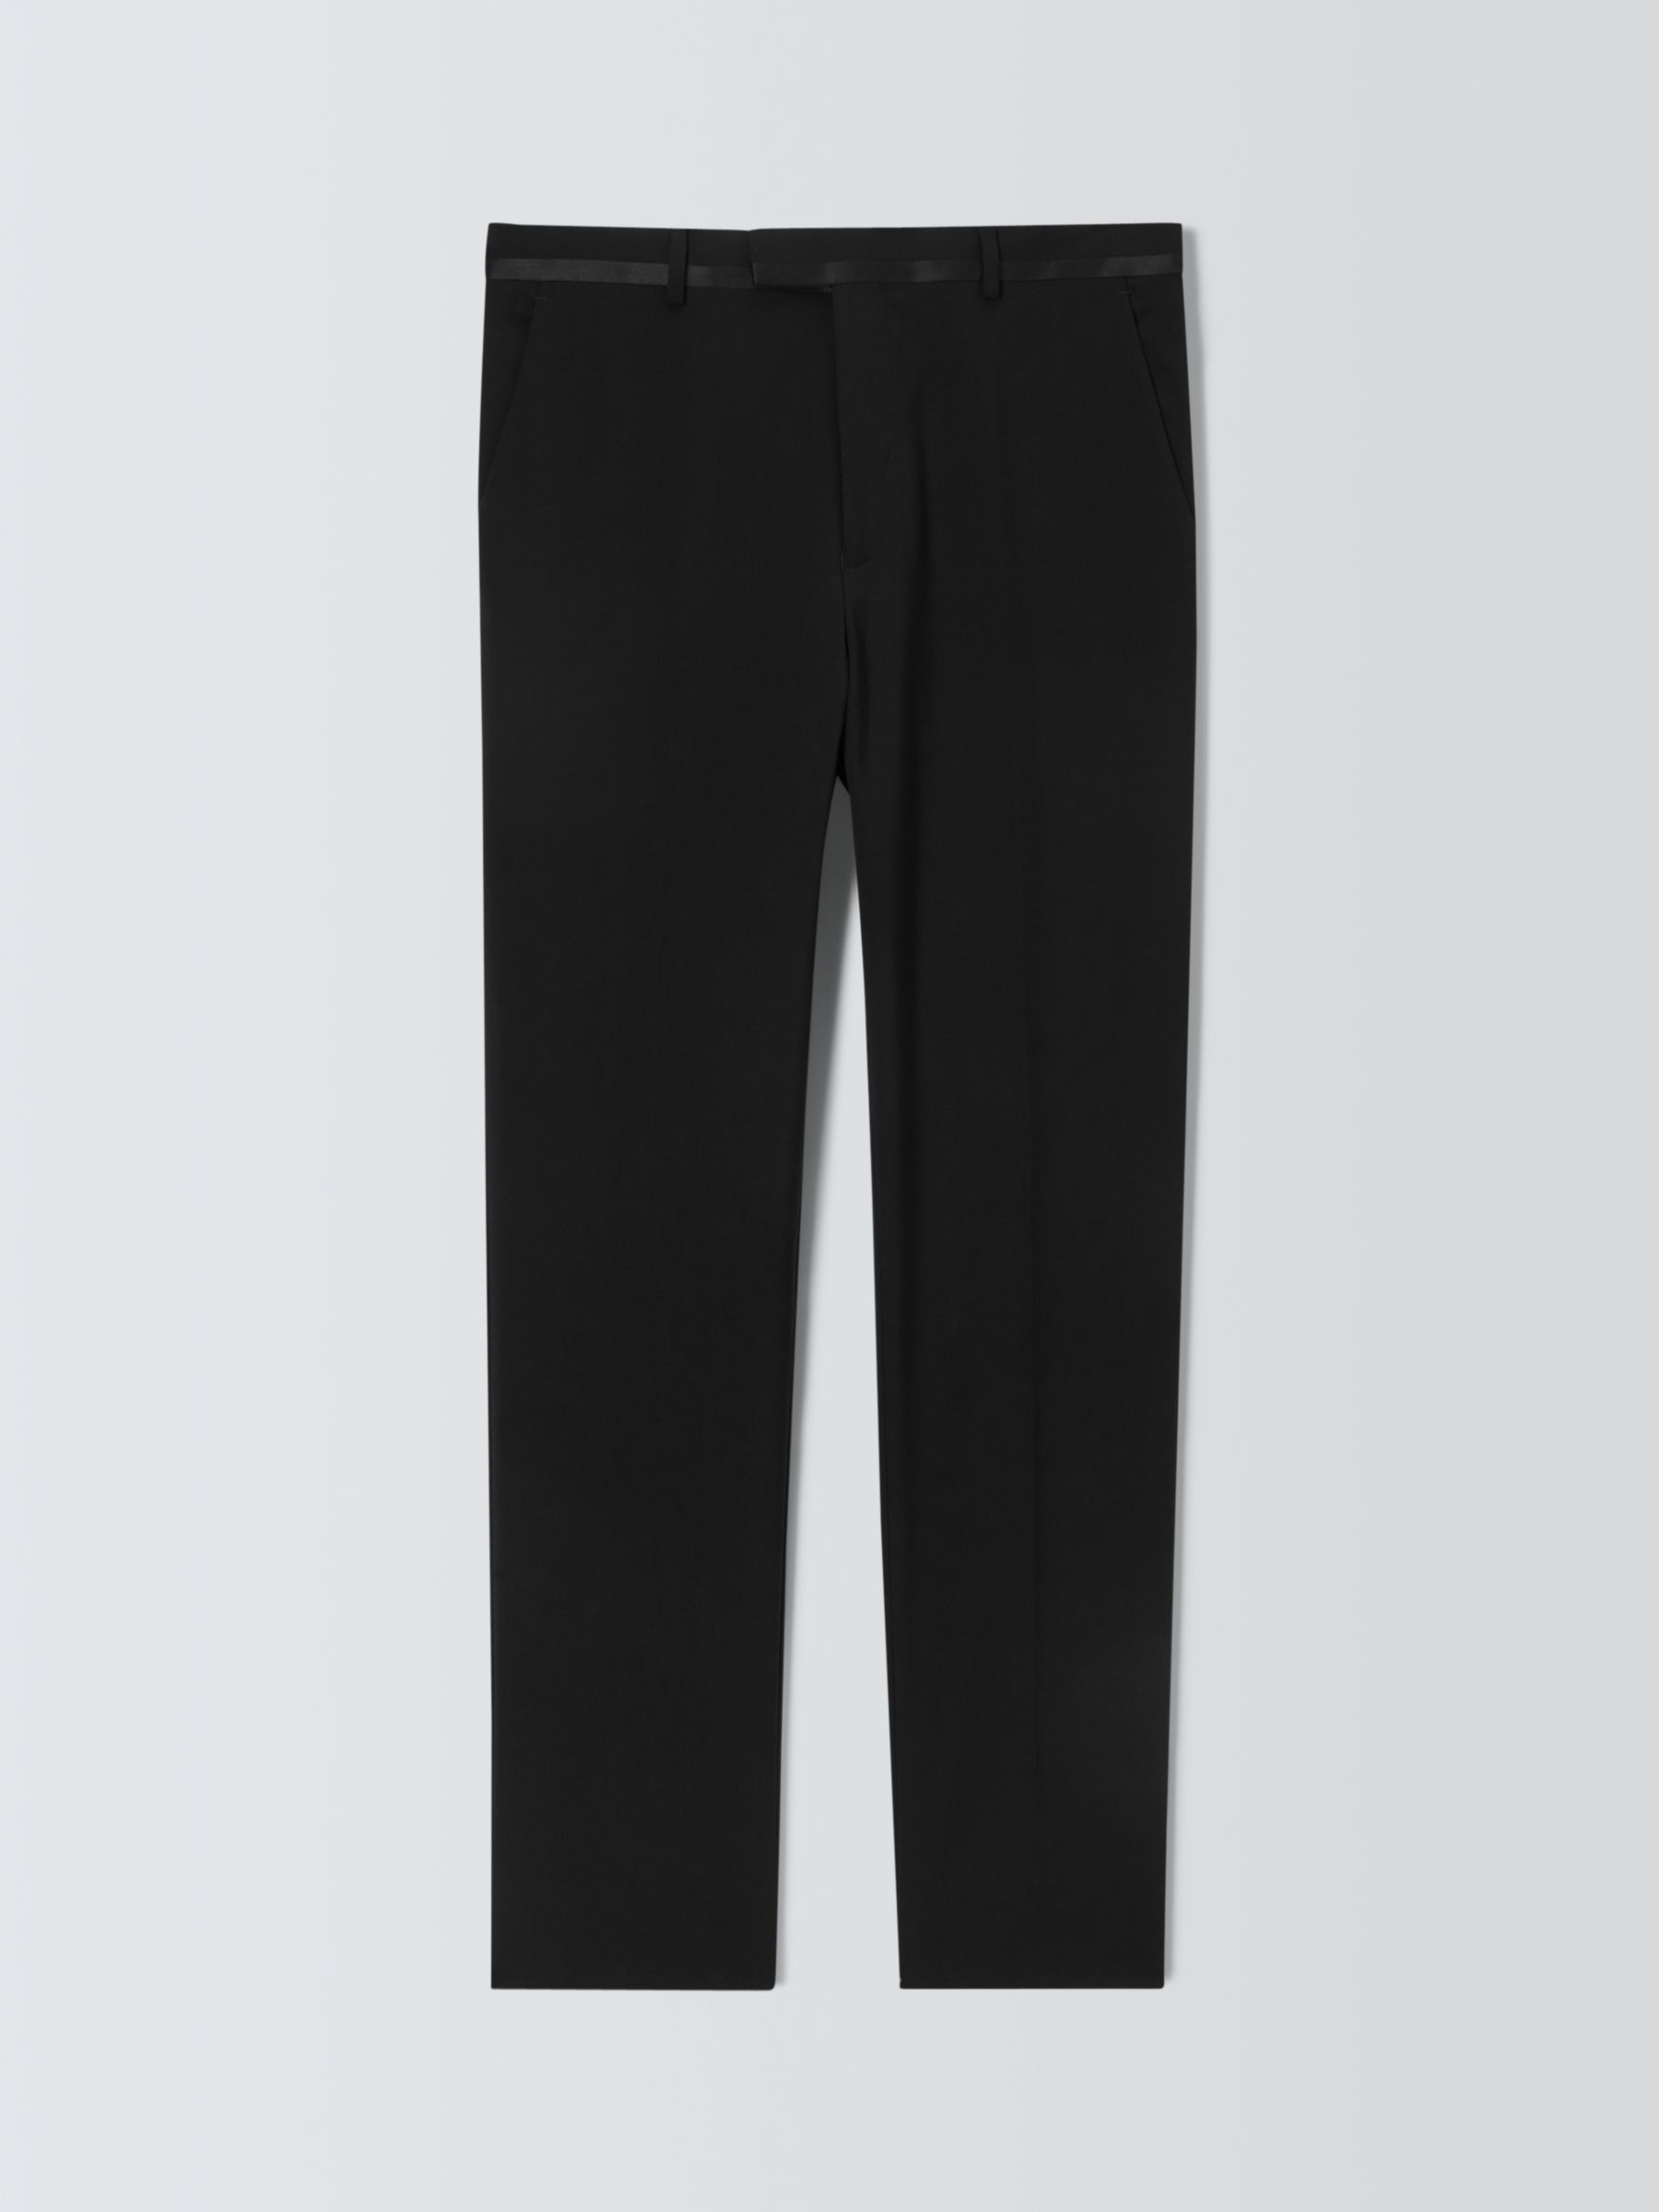 Kin Plain Slim Fit Dinner Suit Trousers, Black at John Lewis & Partners